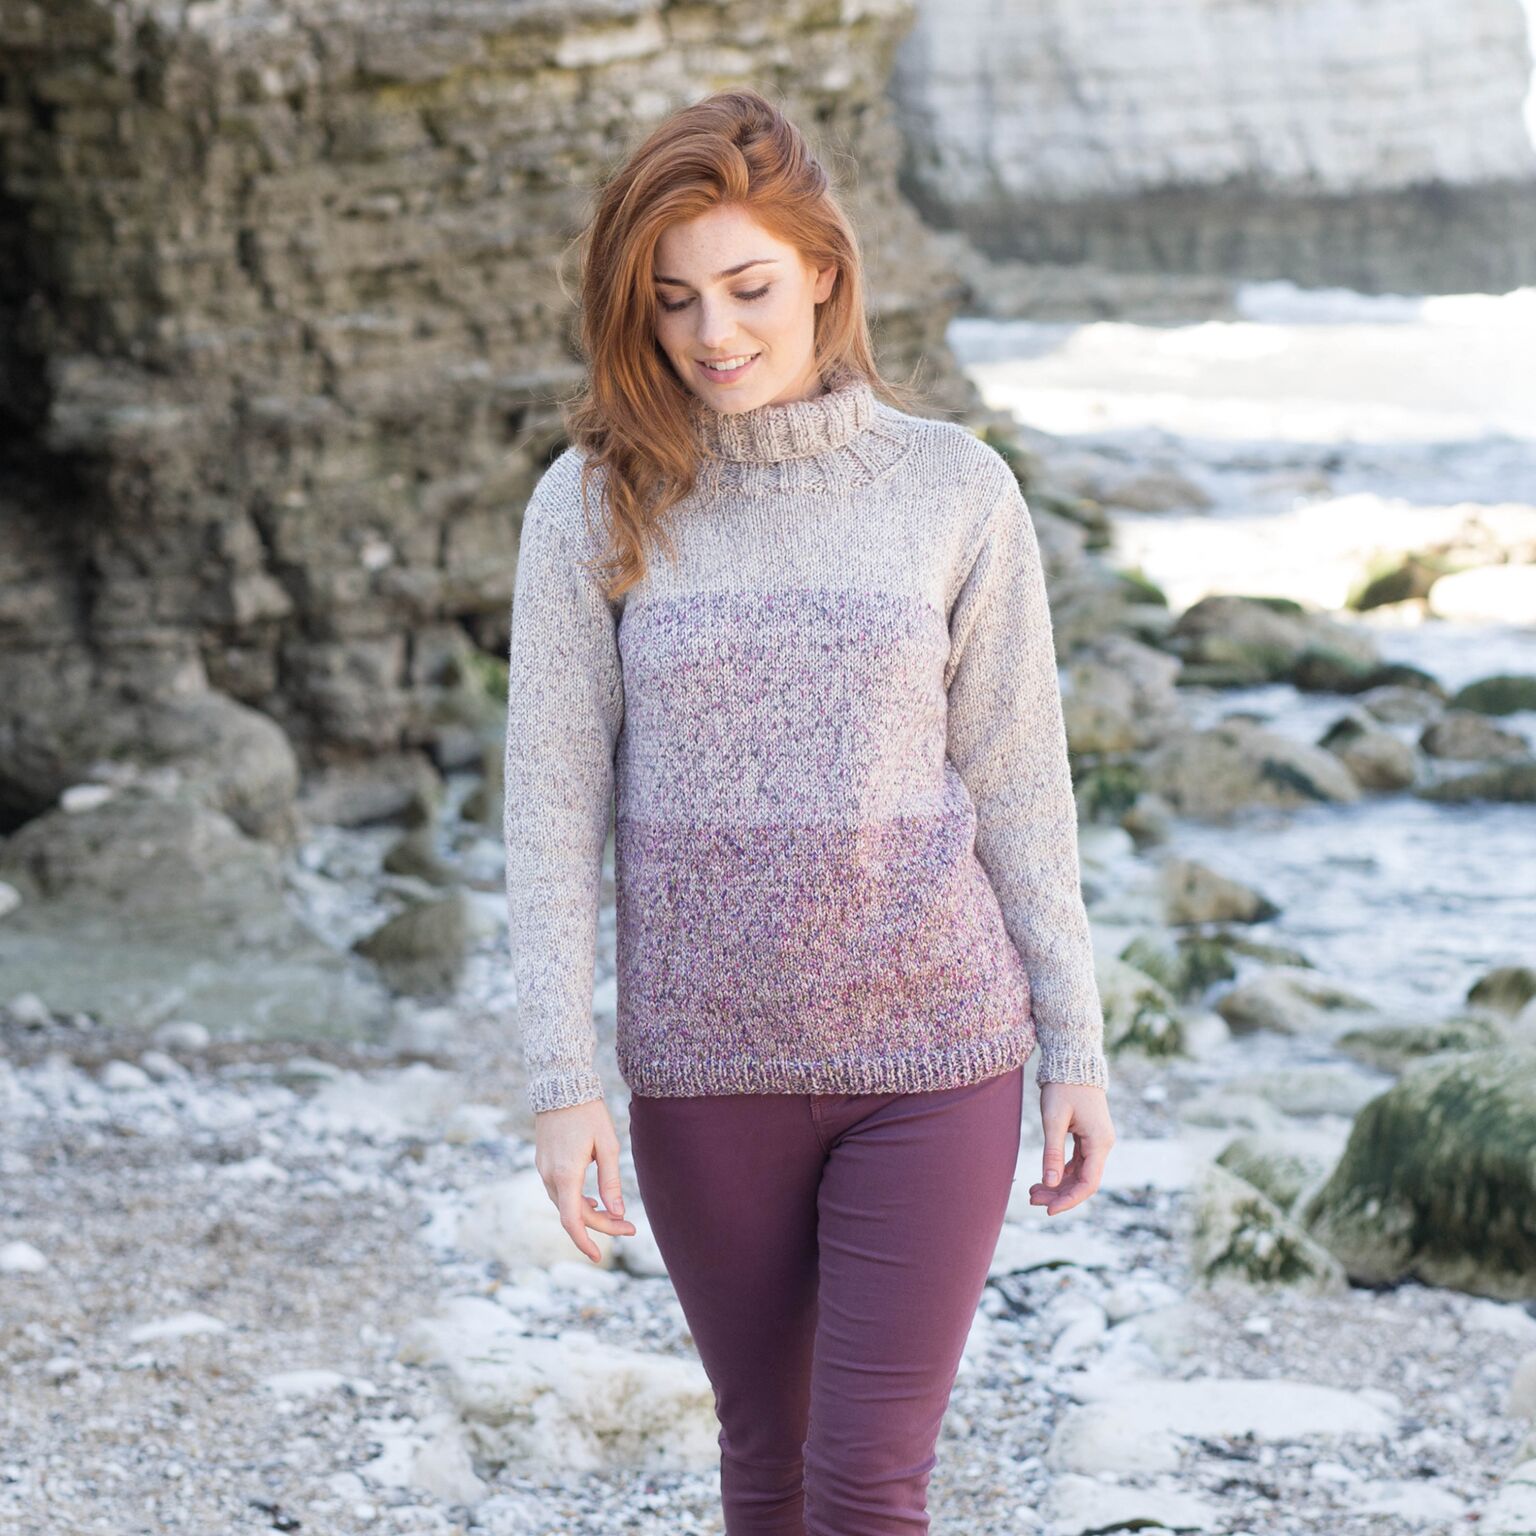 wys-croft-emeliasweater.jpg